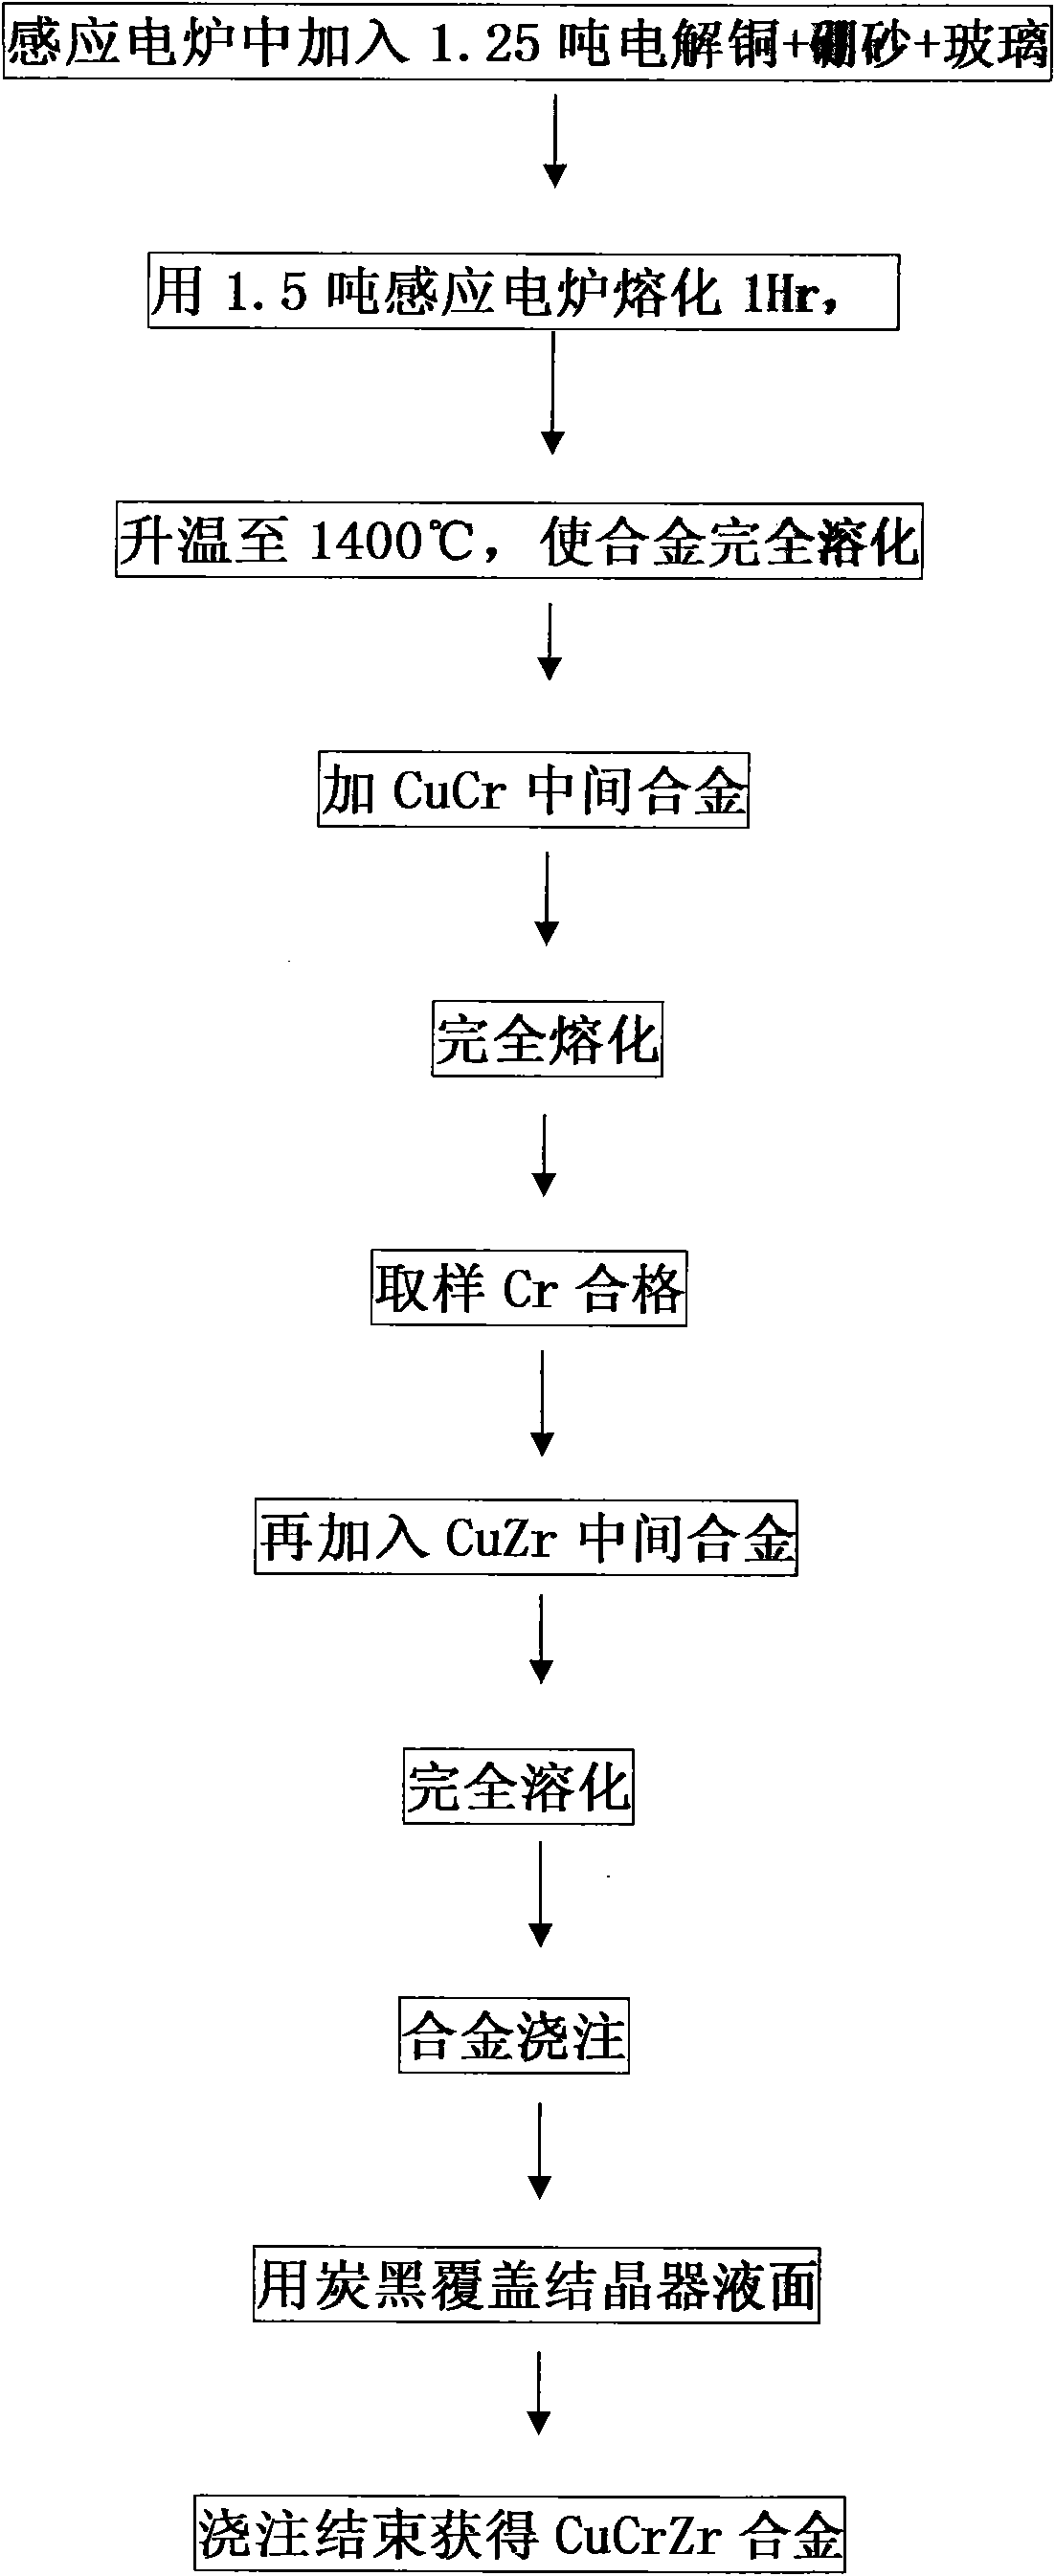 Non-vacuum smelting method of CuCrZr alloy